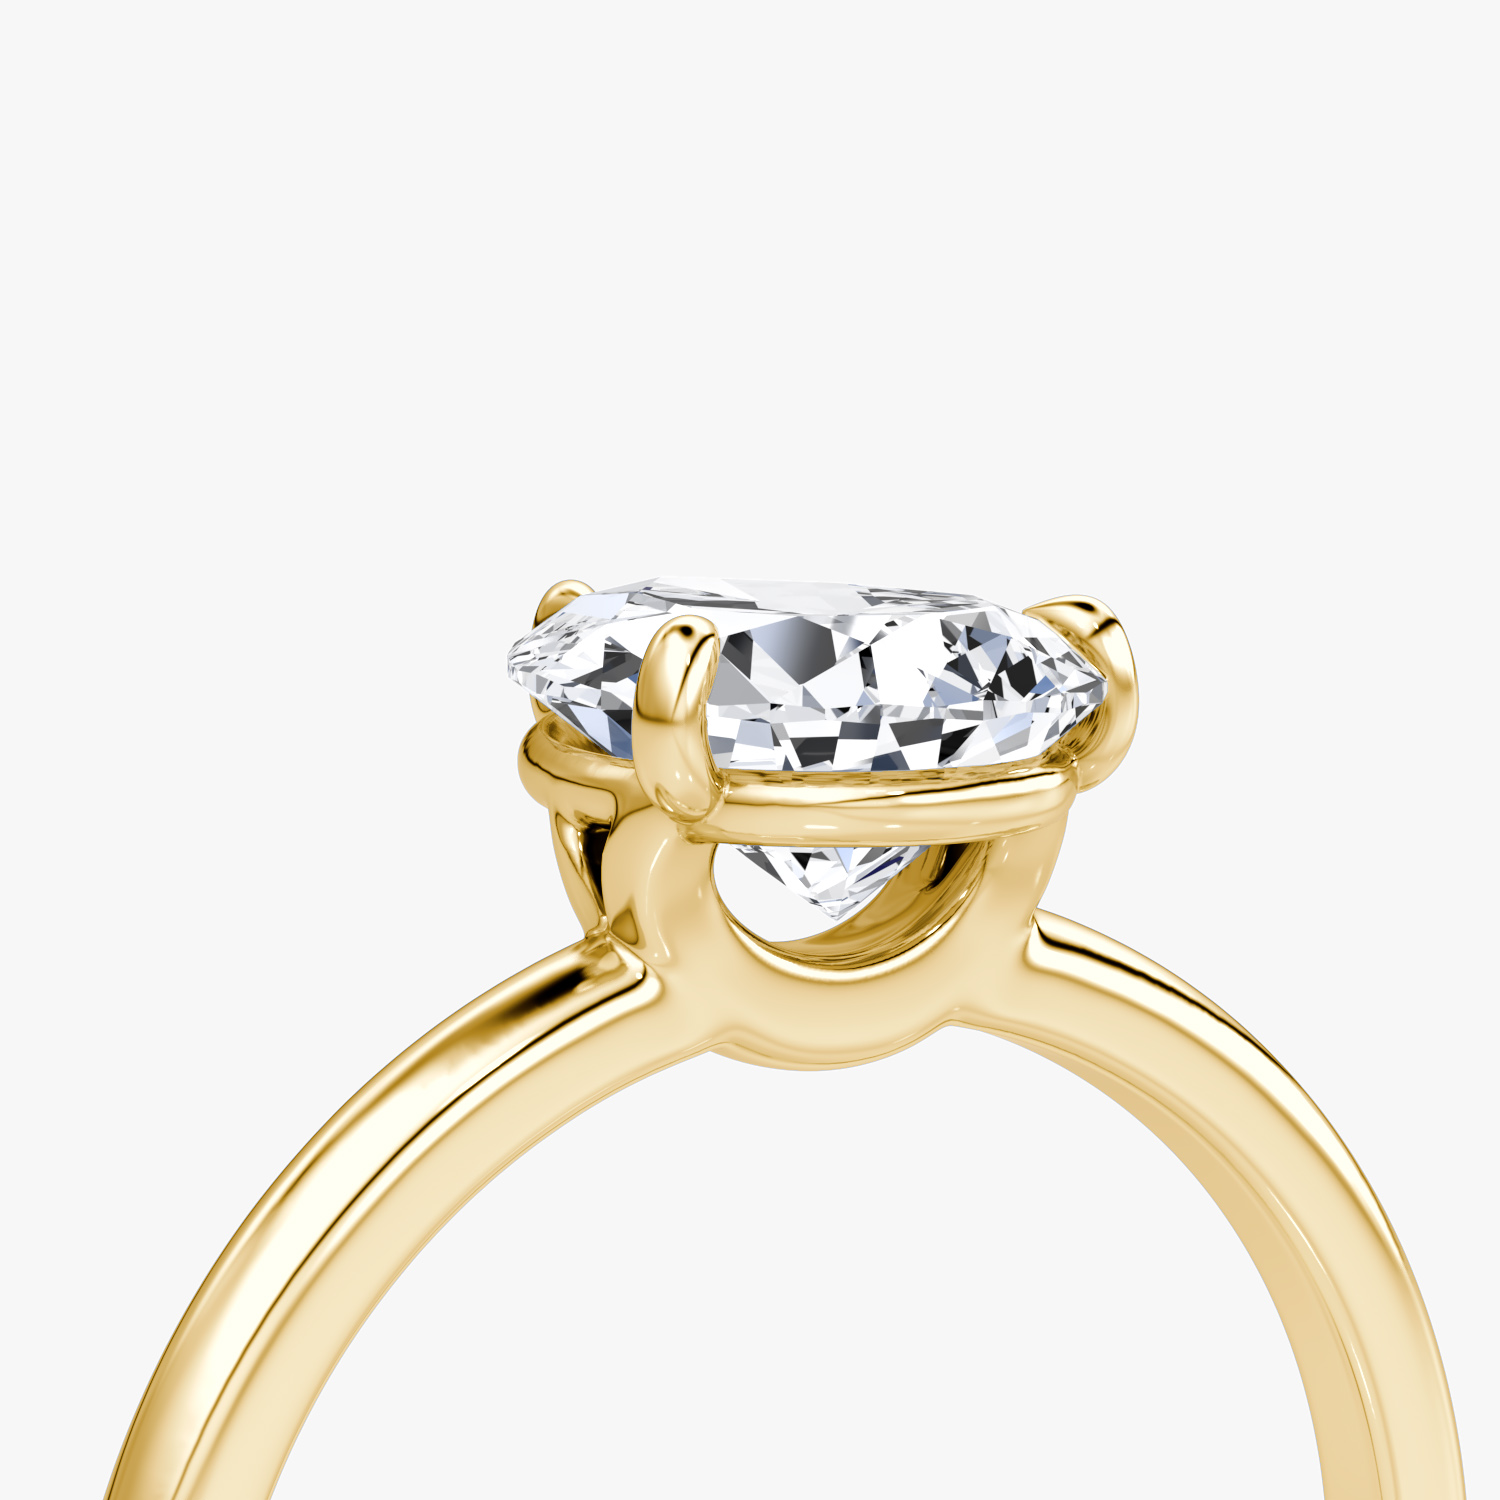 Buy 4 Prong Setting Plain Engagement Ring Online US - Diamonds Factory